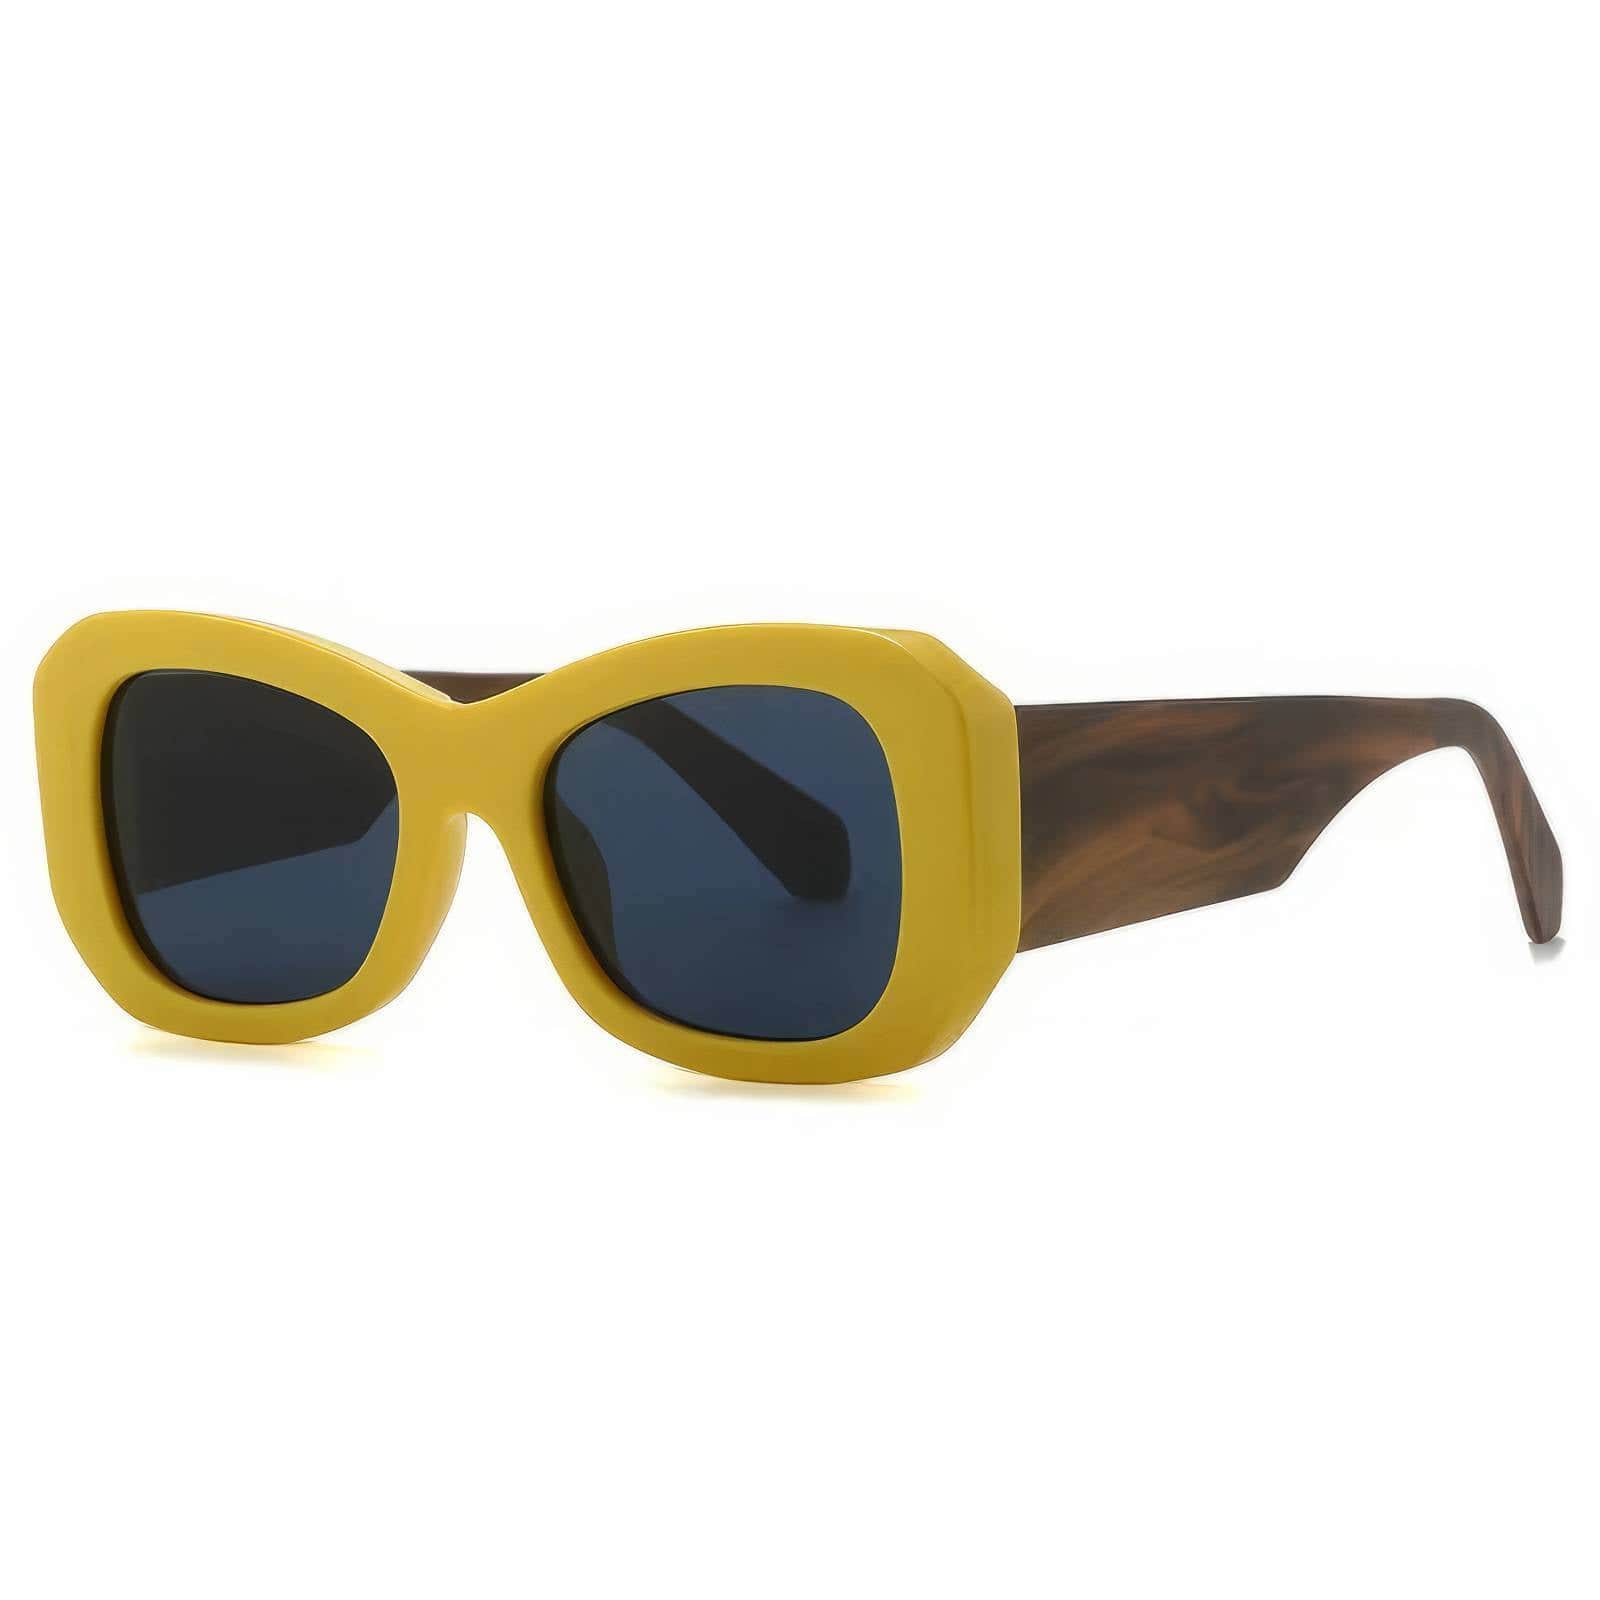 Funky Trending Square Sunglasses Gold/Gray / Resin